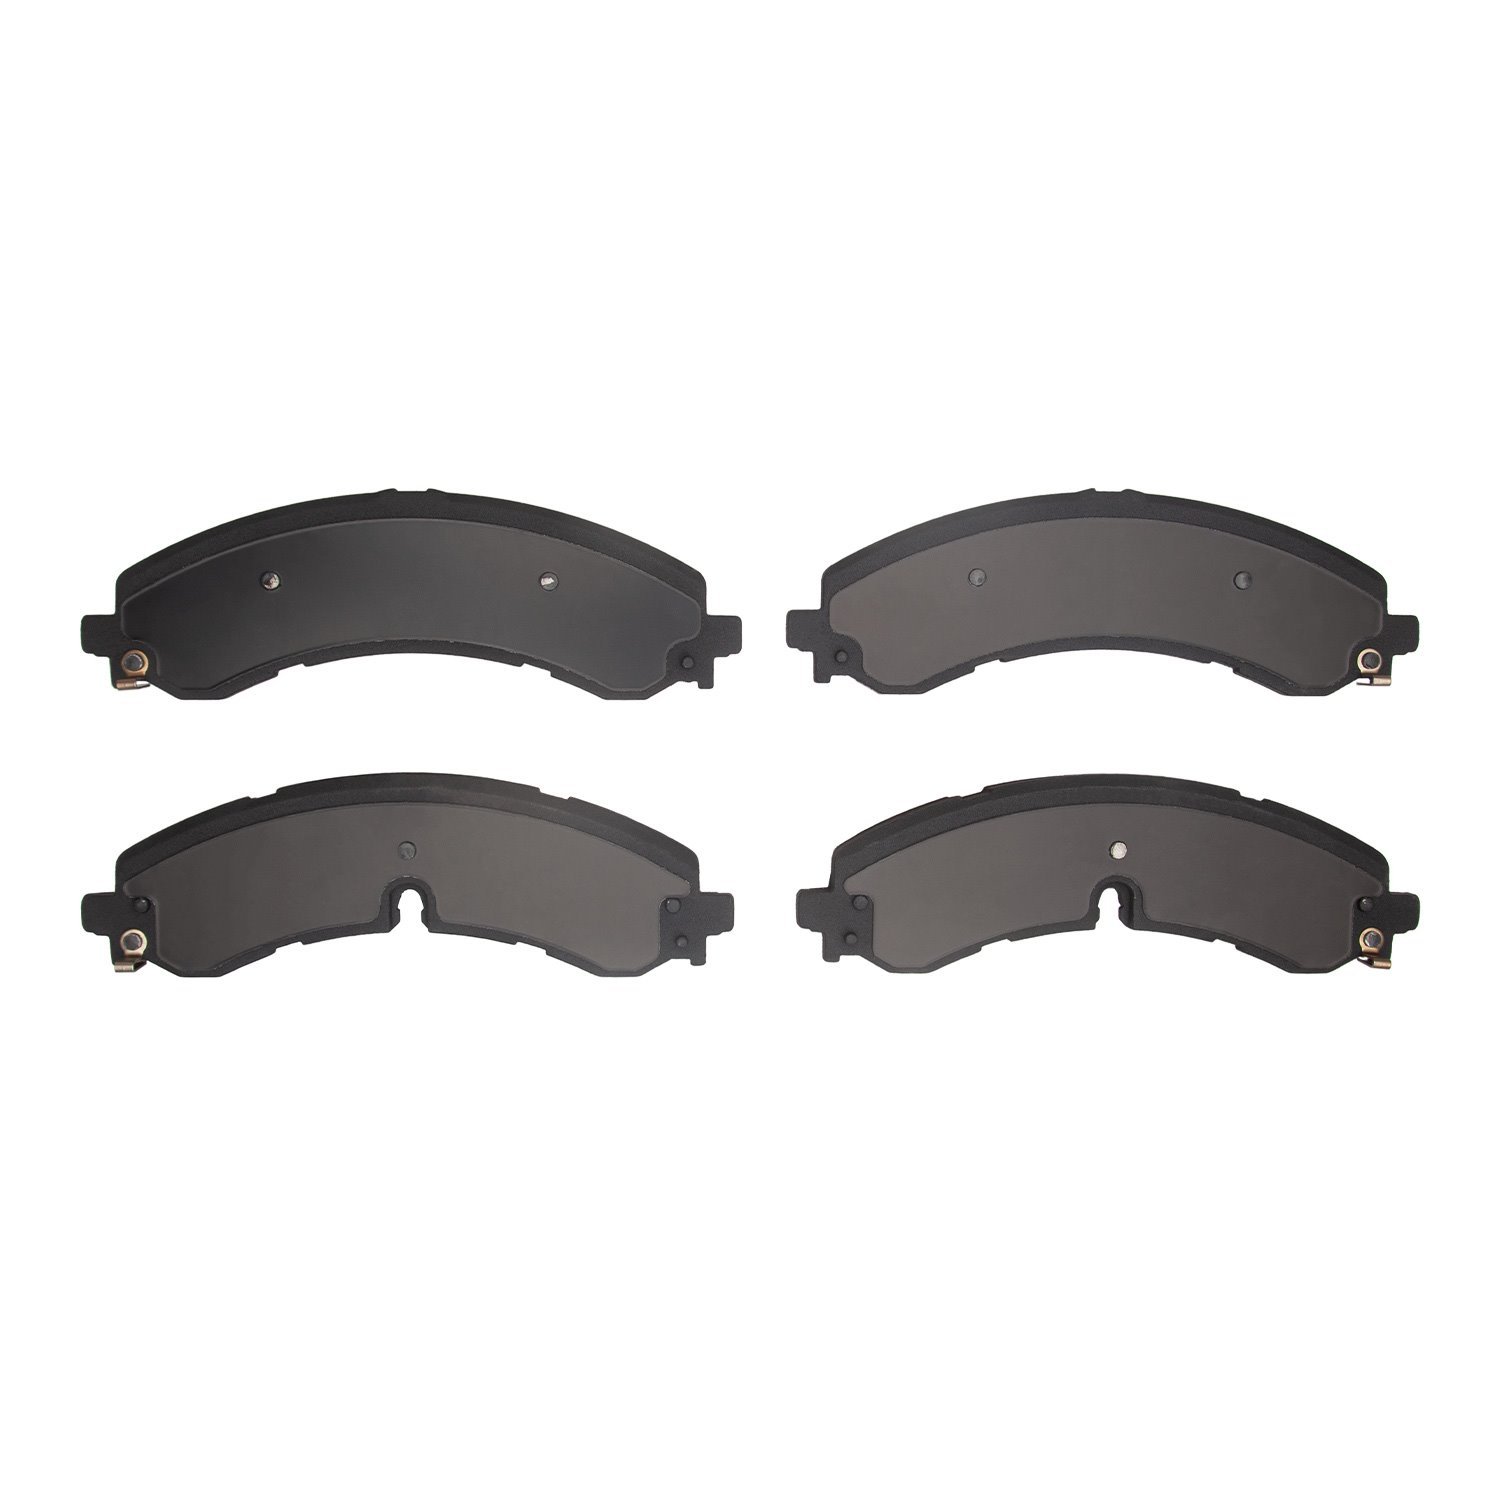 1551-2250-01 5000 Advanced Ceramic Brake Pads & Hardware Kit, Fits Select GM, Position: Rear,Front